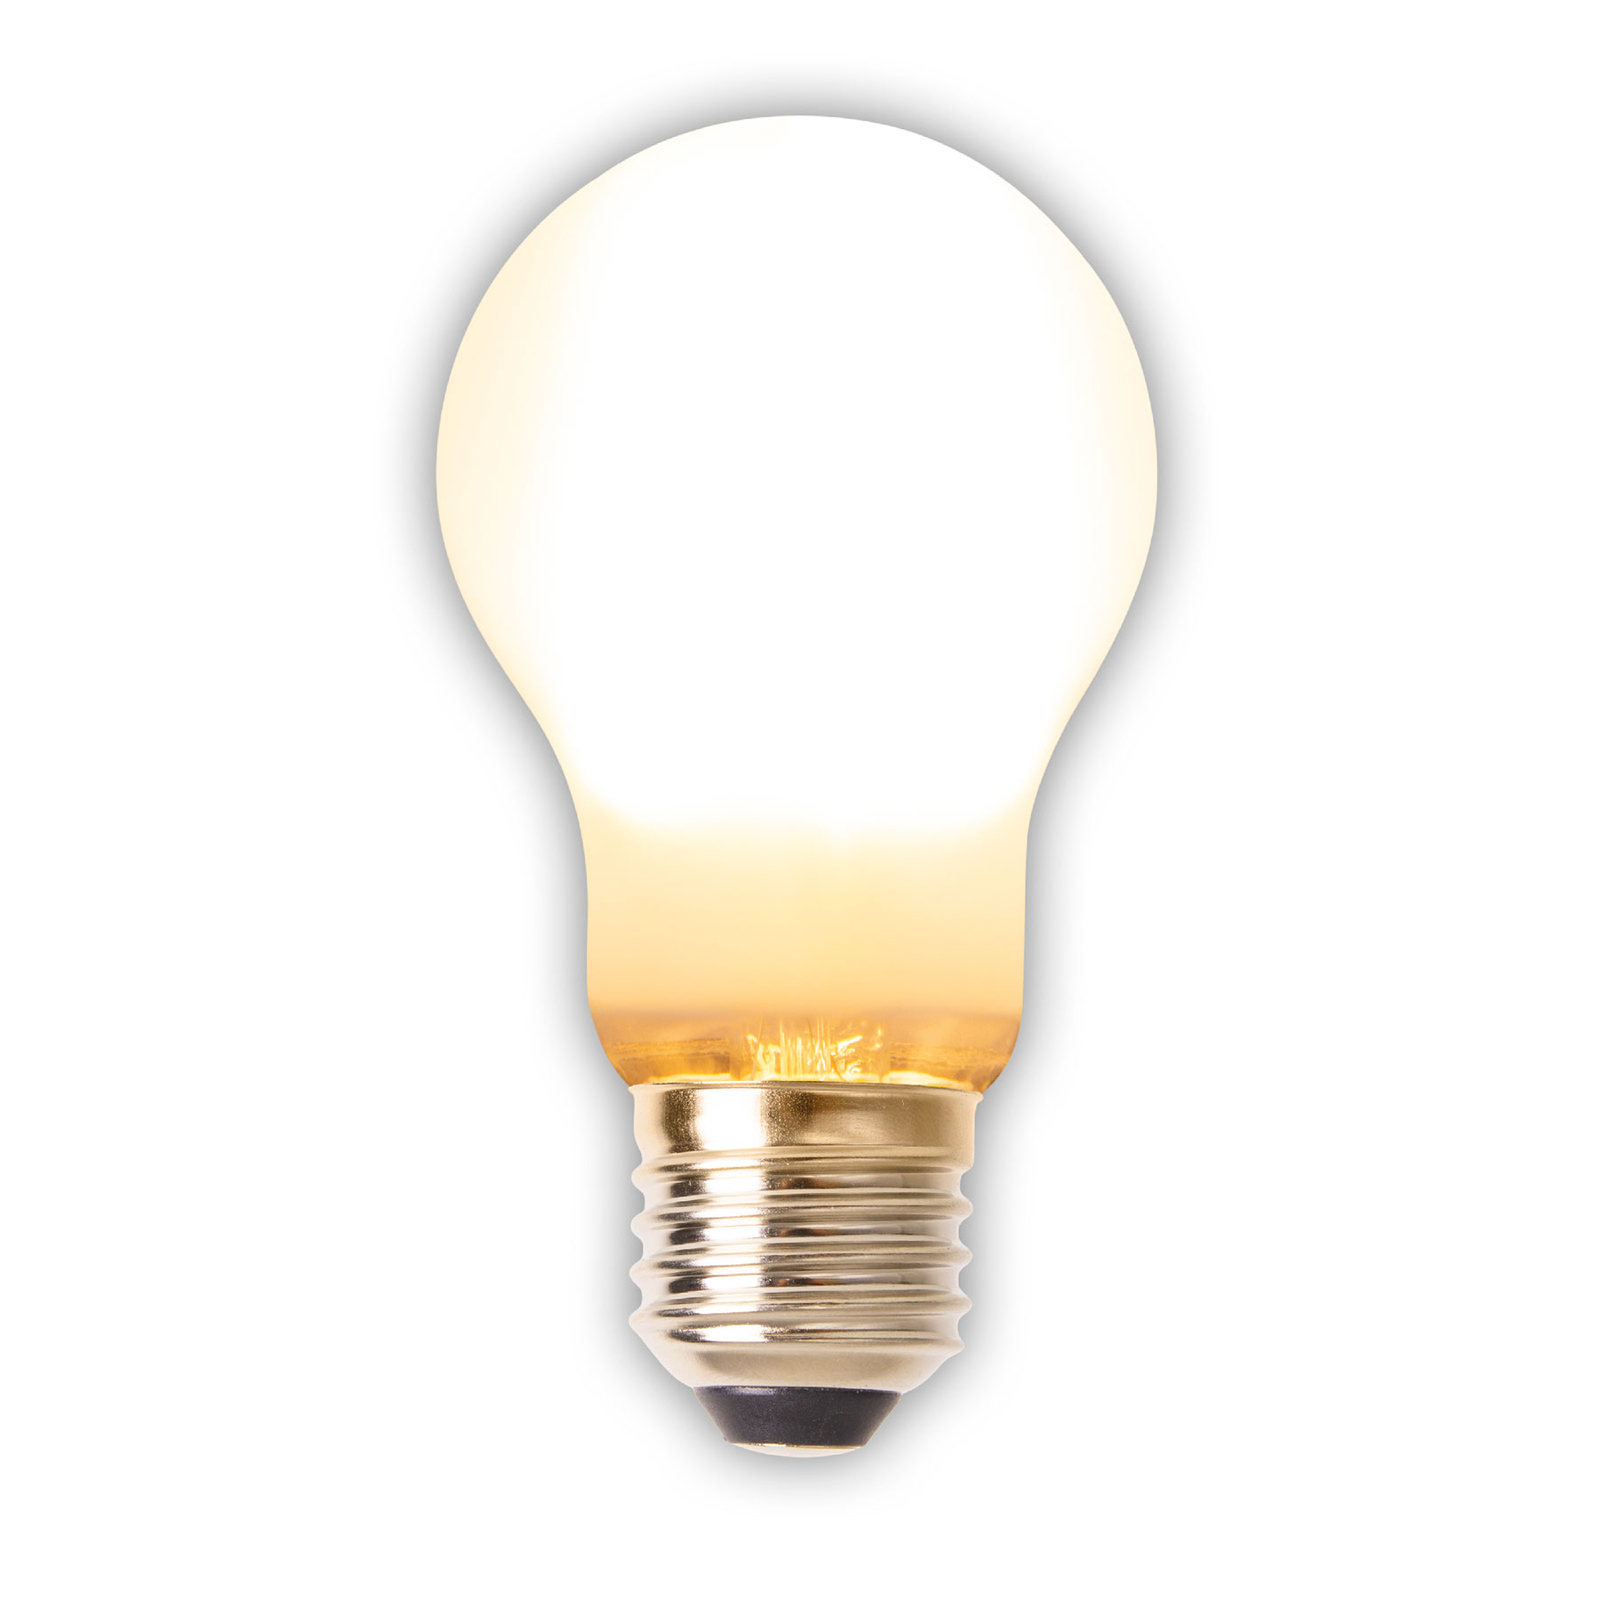 LED bulb E27 8.3W 750 lumens warm white 6-pack